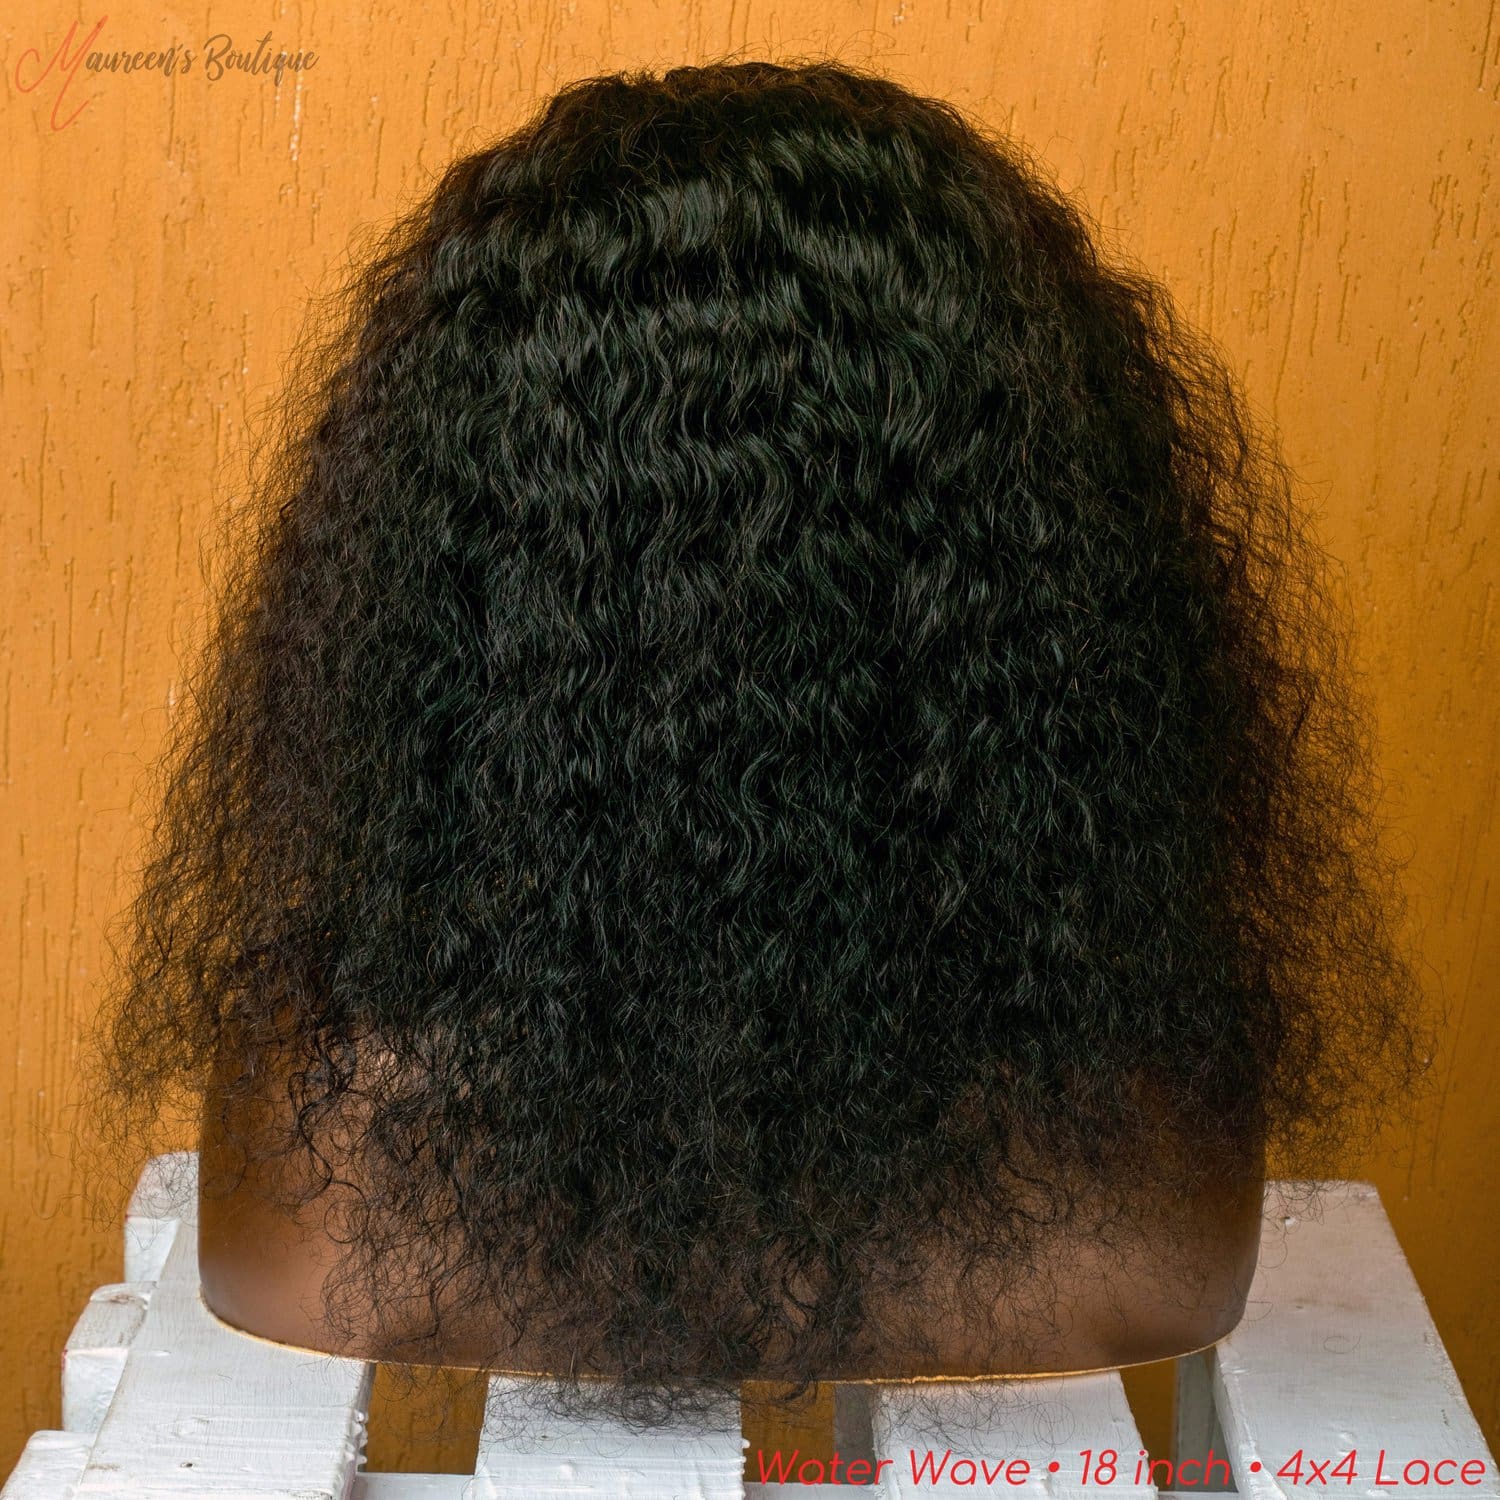 Water Wave 4x4 human hair wig 18 inch maureens.com 3